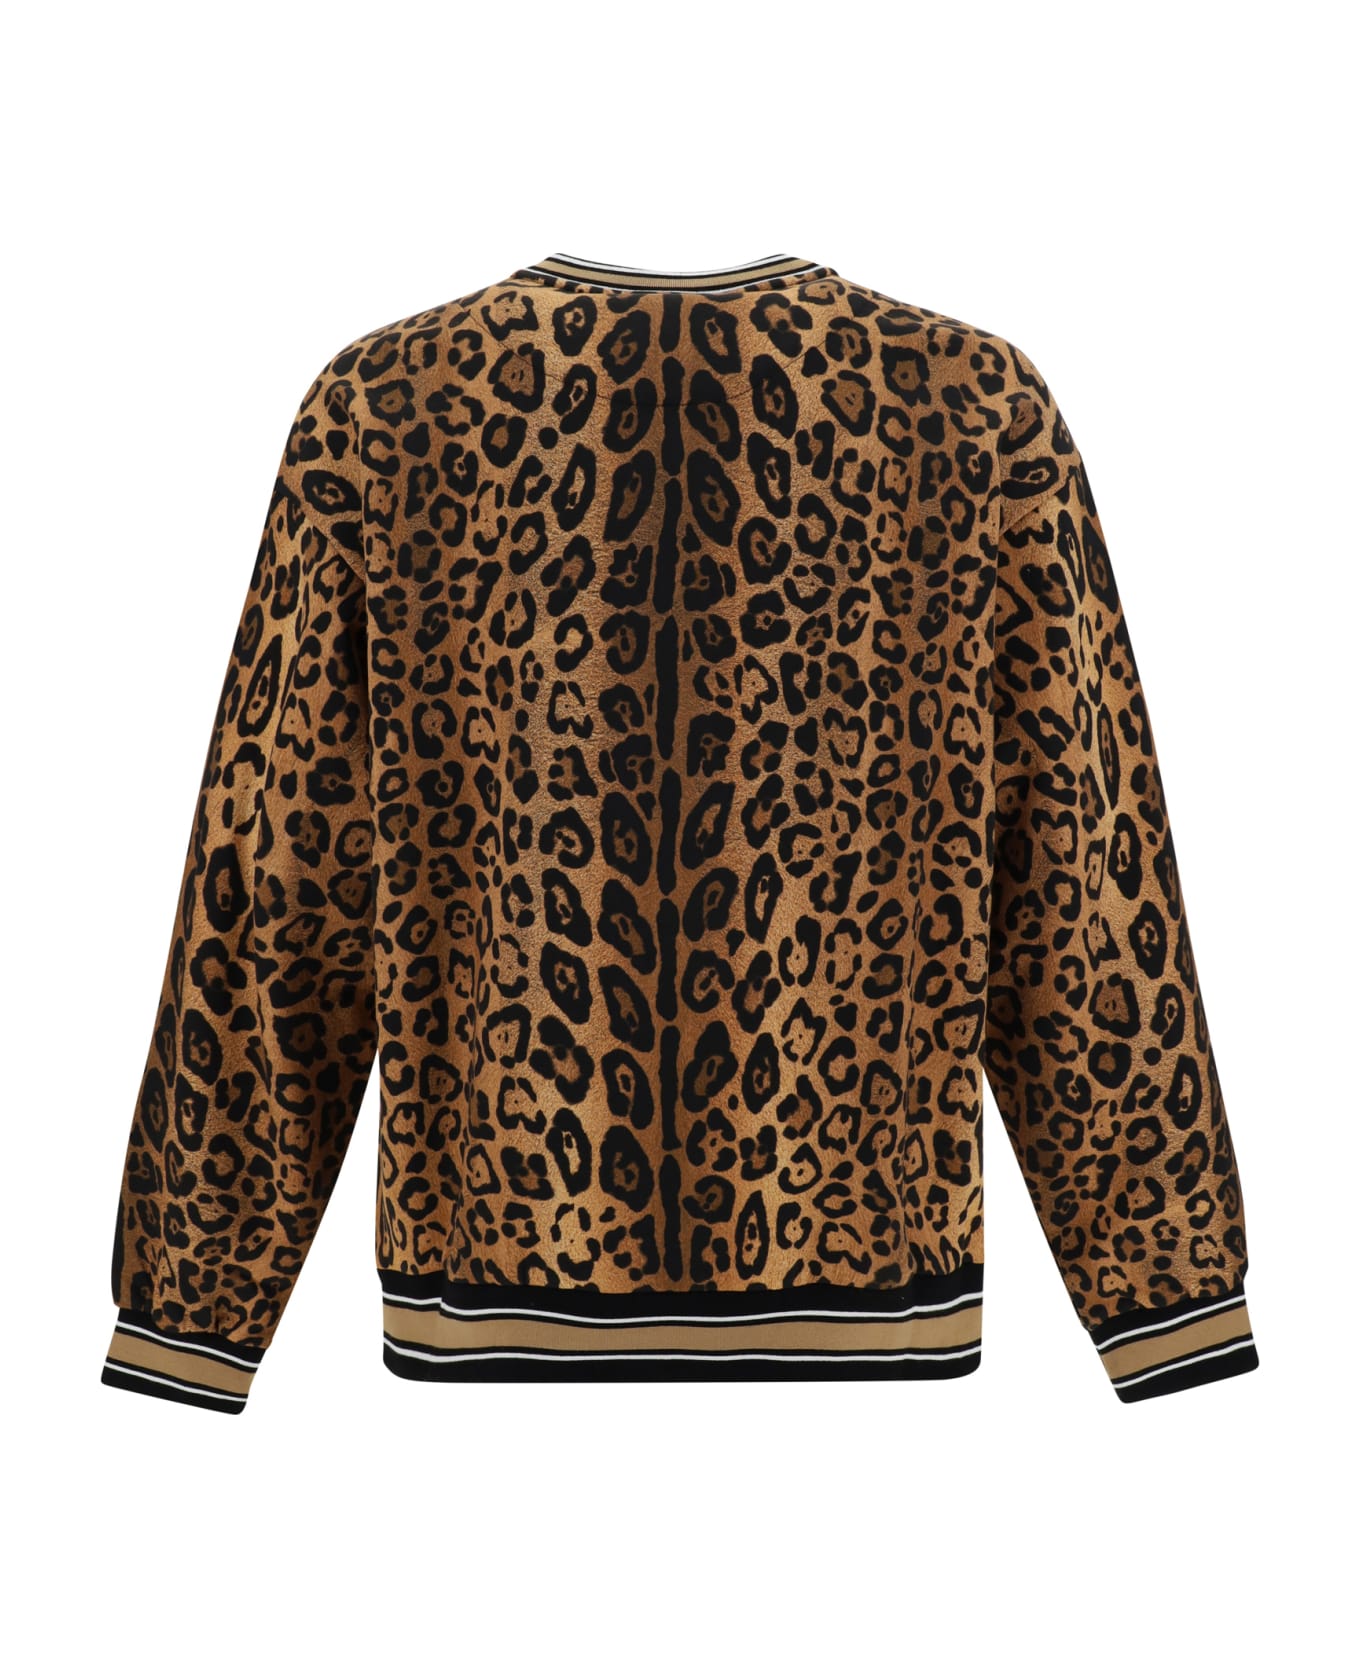 Dolce & Gabbana Leopard Print Sweatshirt - Leo Ingrand Marrone フリース